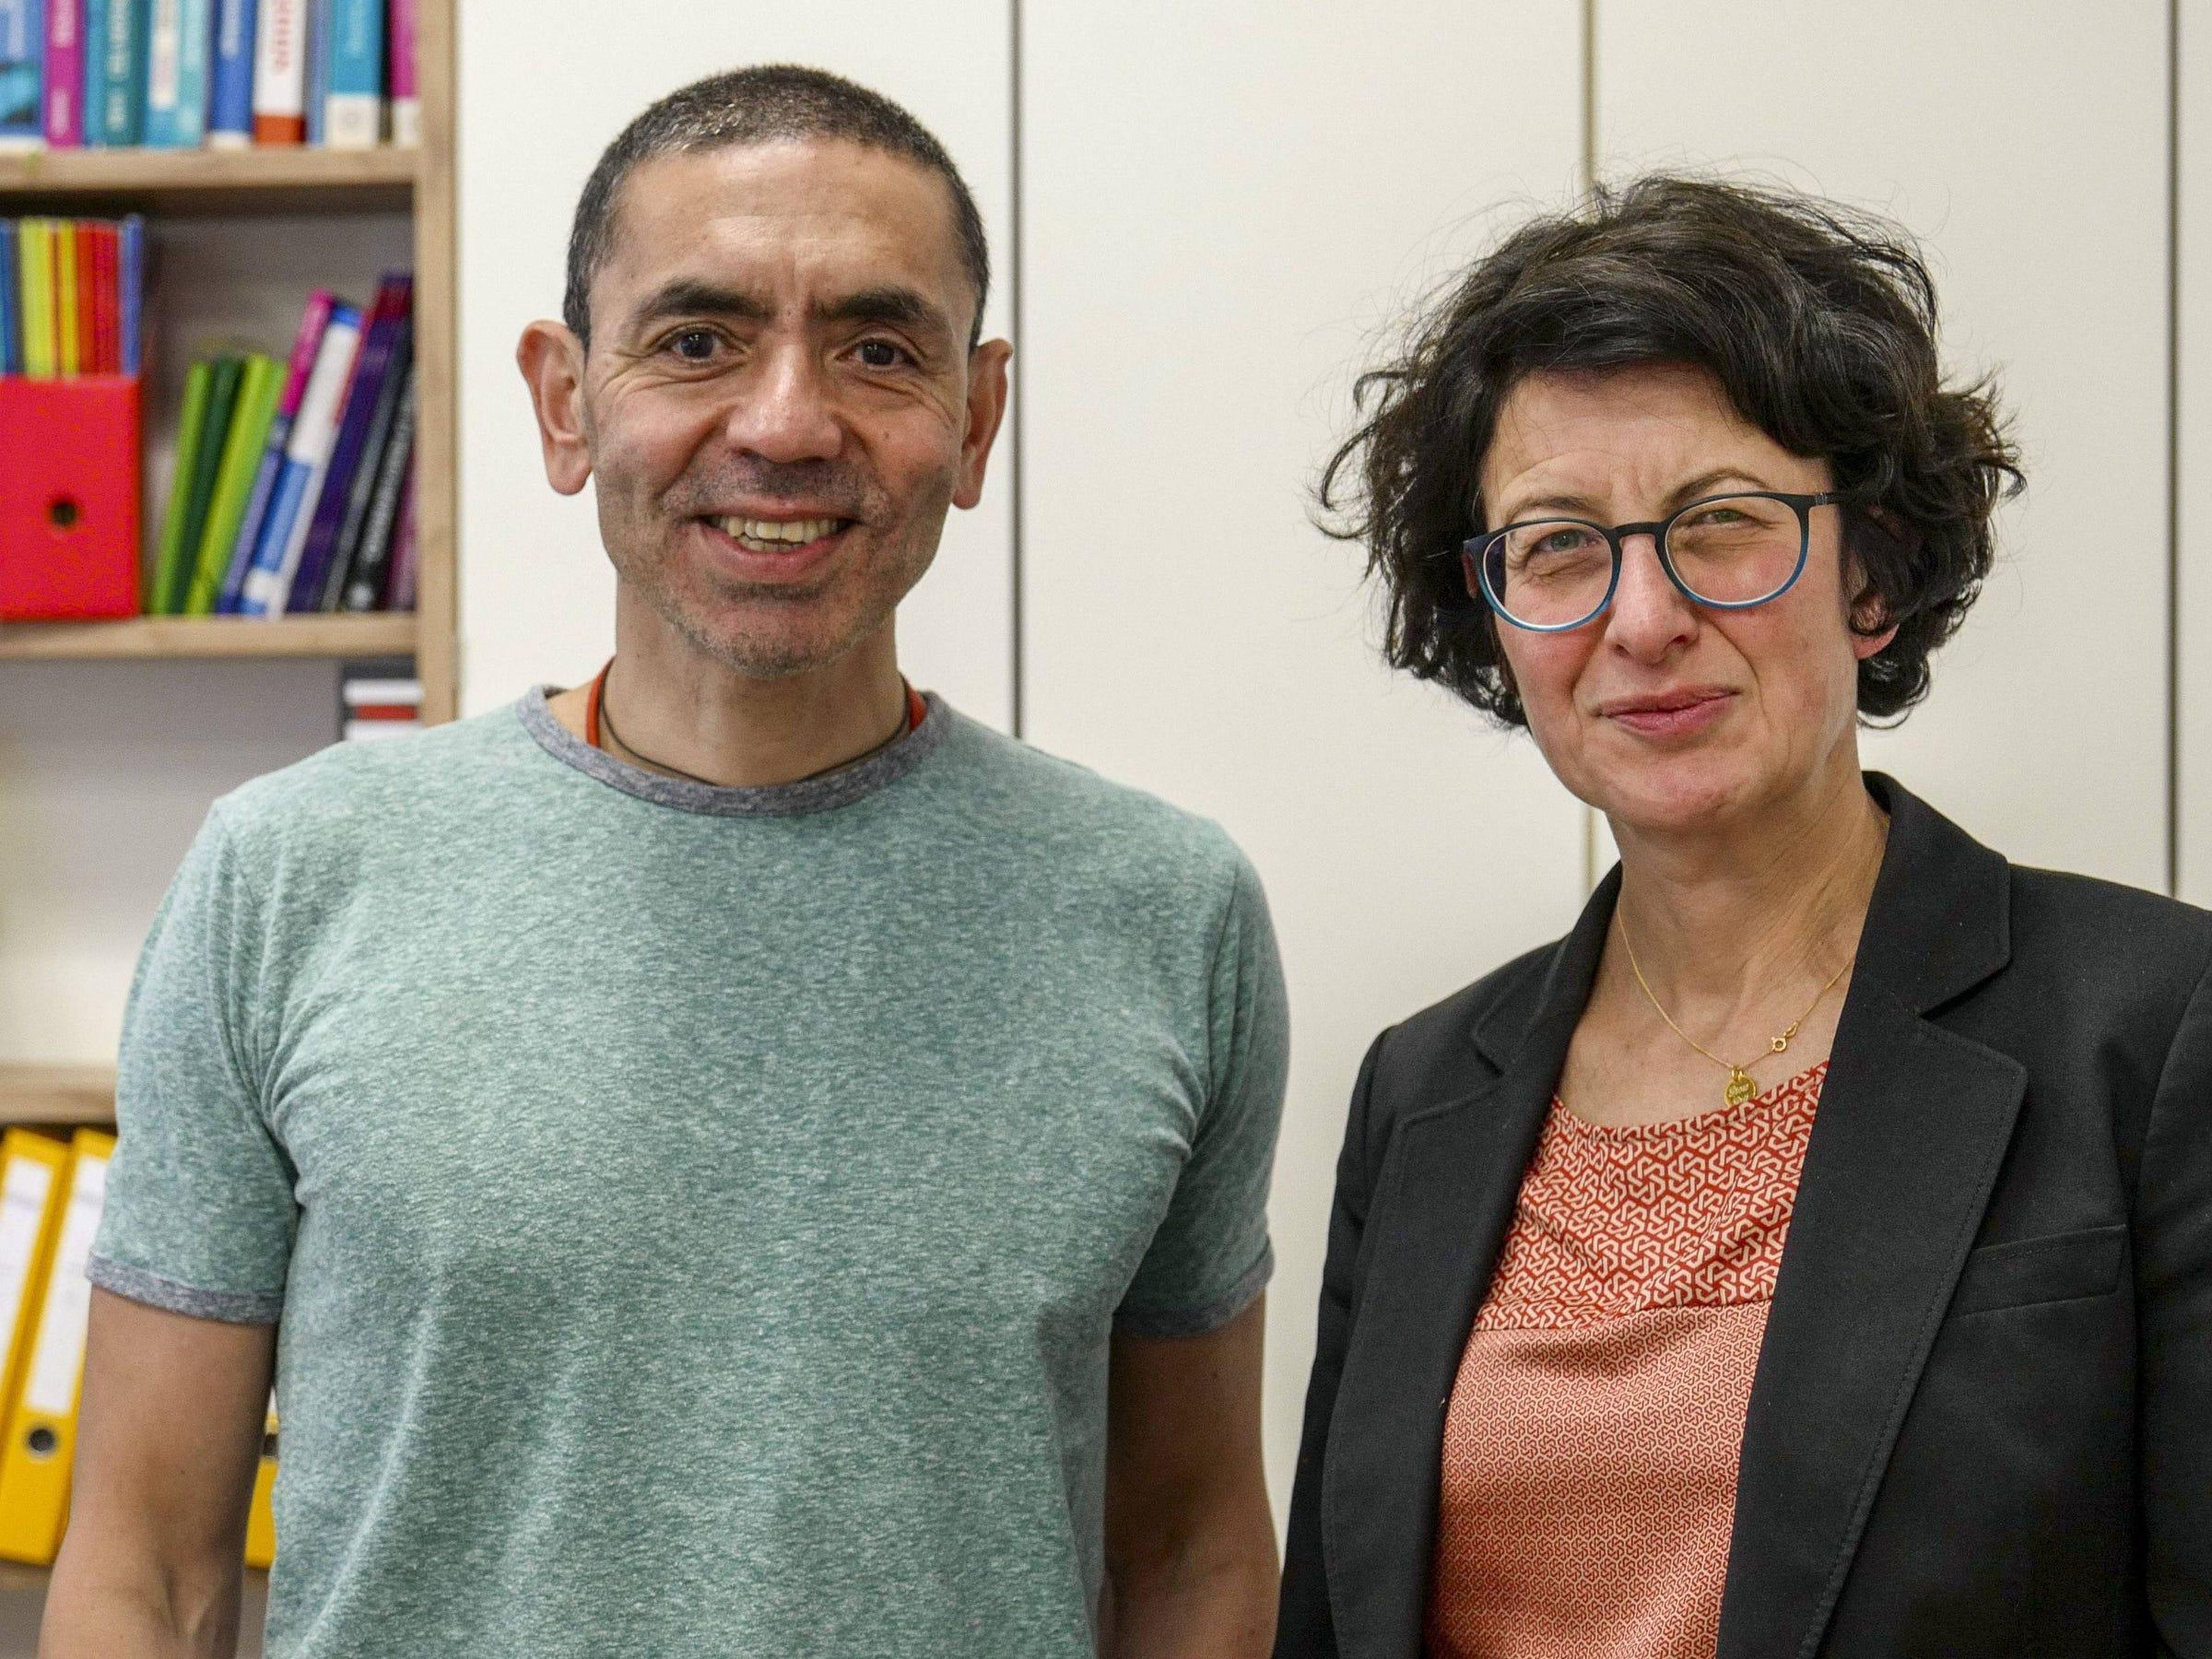 Ugur Sahin y Ozlem Tuereci, el matrimonio cofundador de BioNTech.